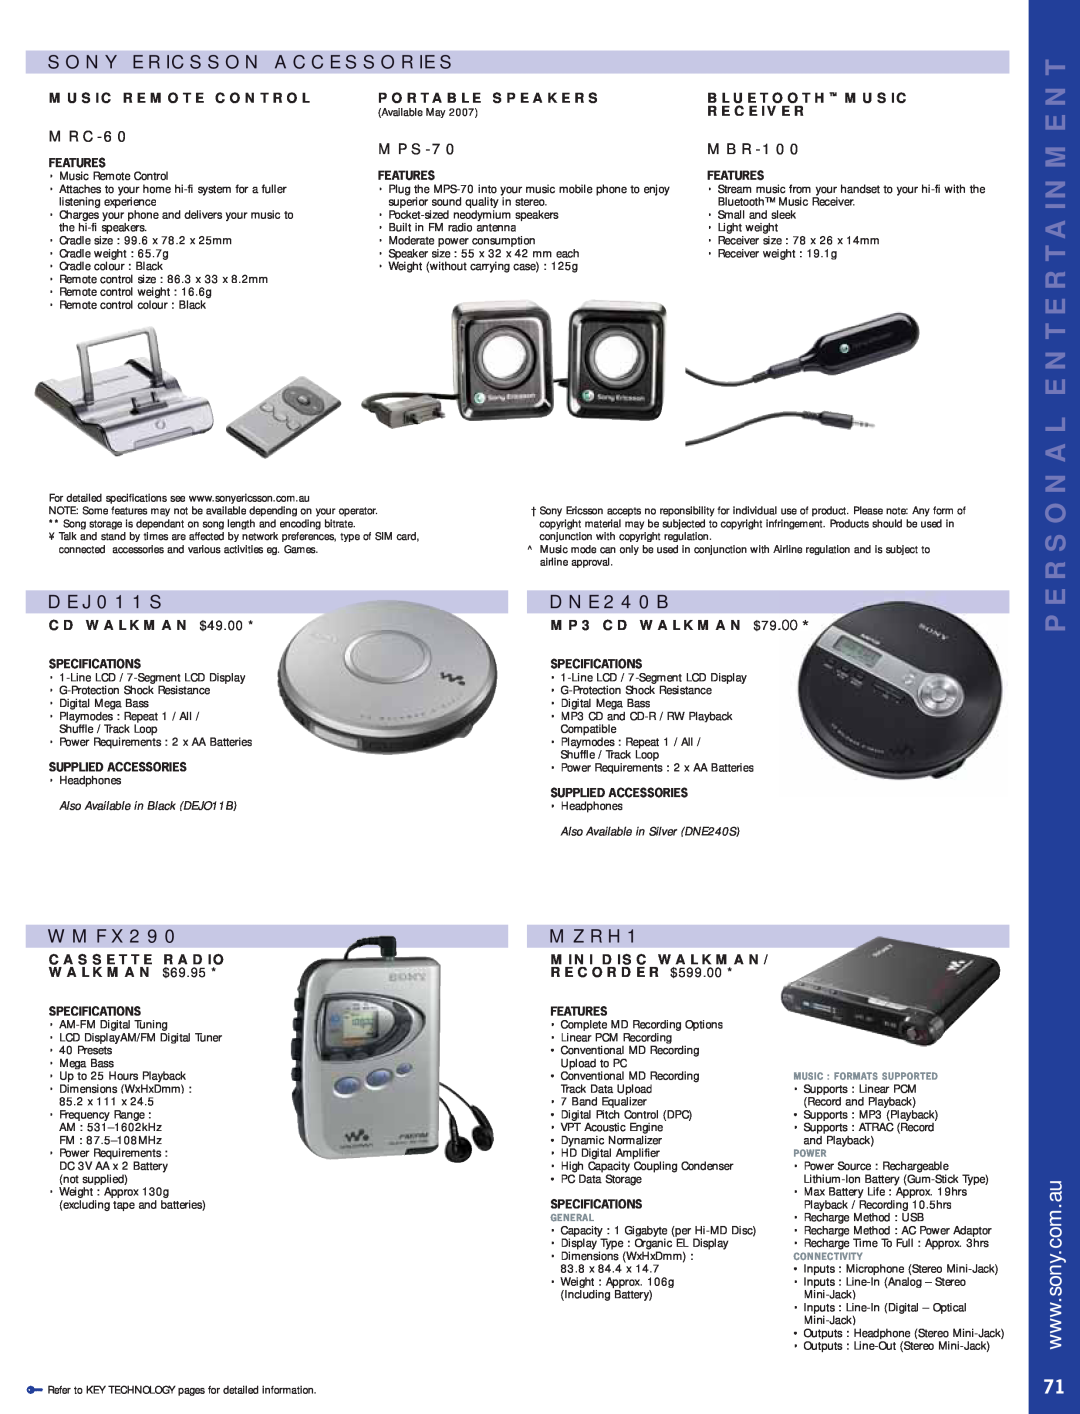 Sony Bravia LCD TV Sony Ericsson Accessories, DEJ011S, DNE240B, WMFX290, MZRH1, MRC-60, MPS-70, MBR-100, Portable Speakers 